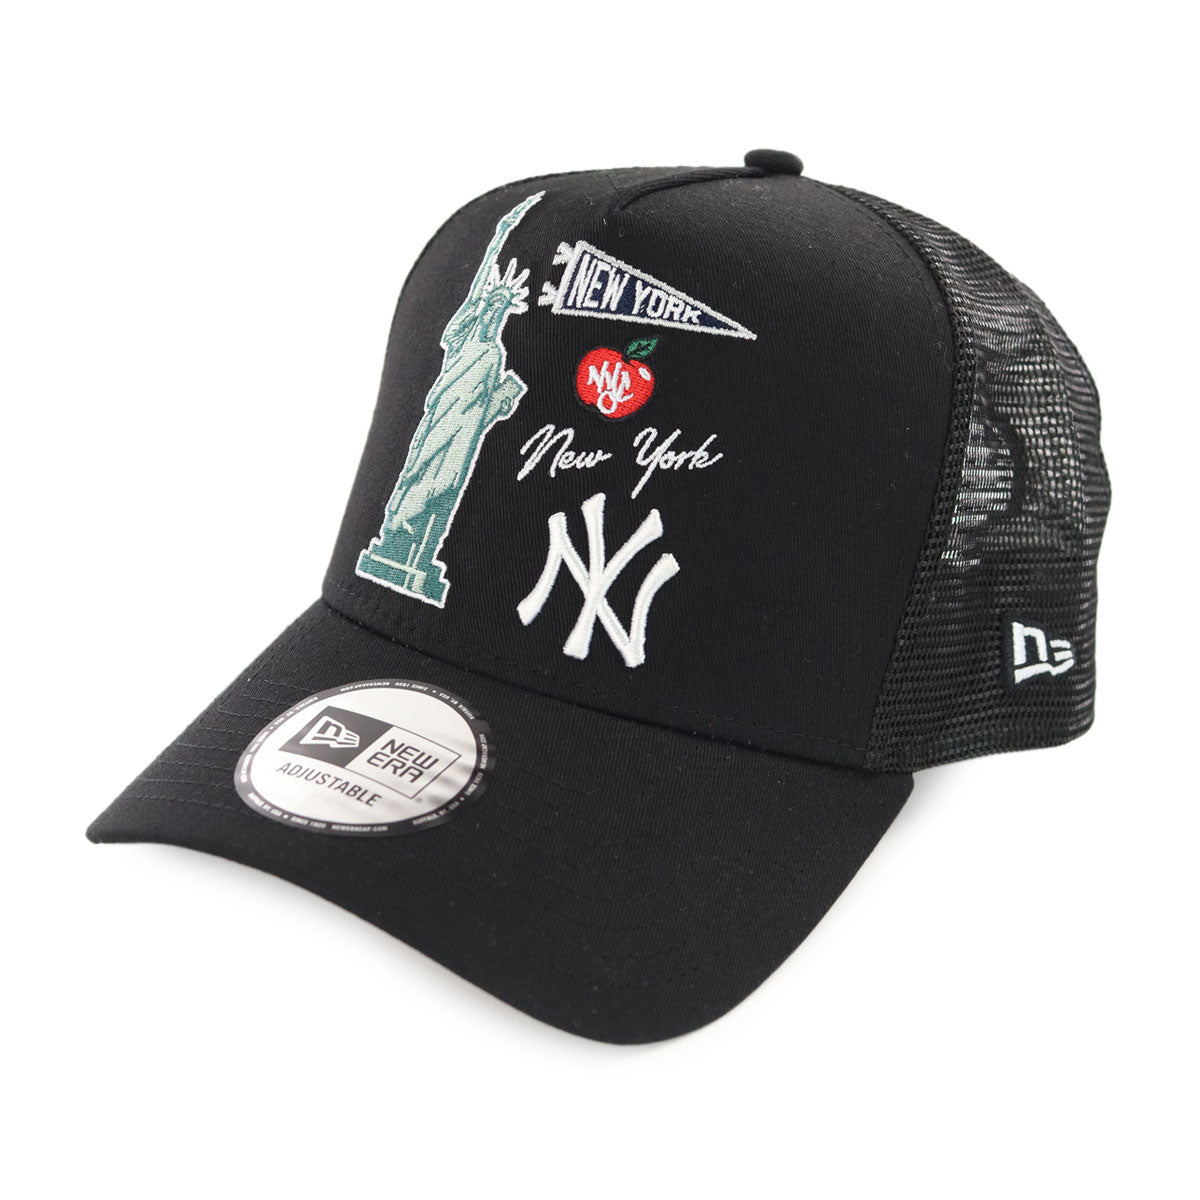 47 New York Yankees Snapback Cap Pink Man B-MVPSP17WBP-RS